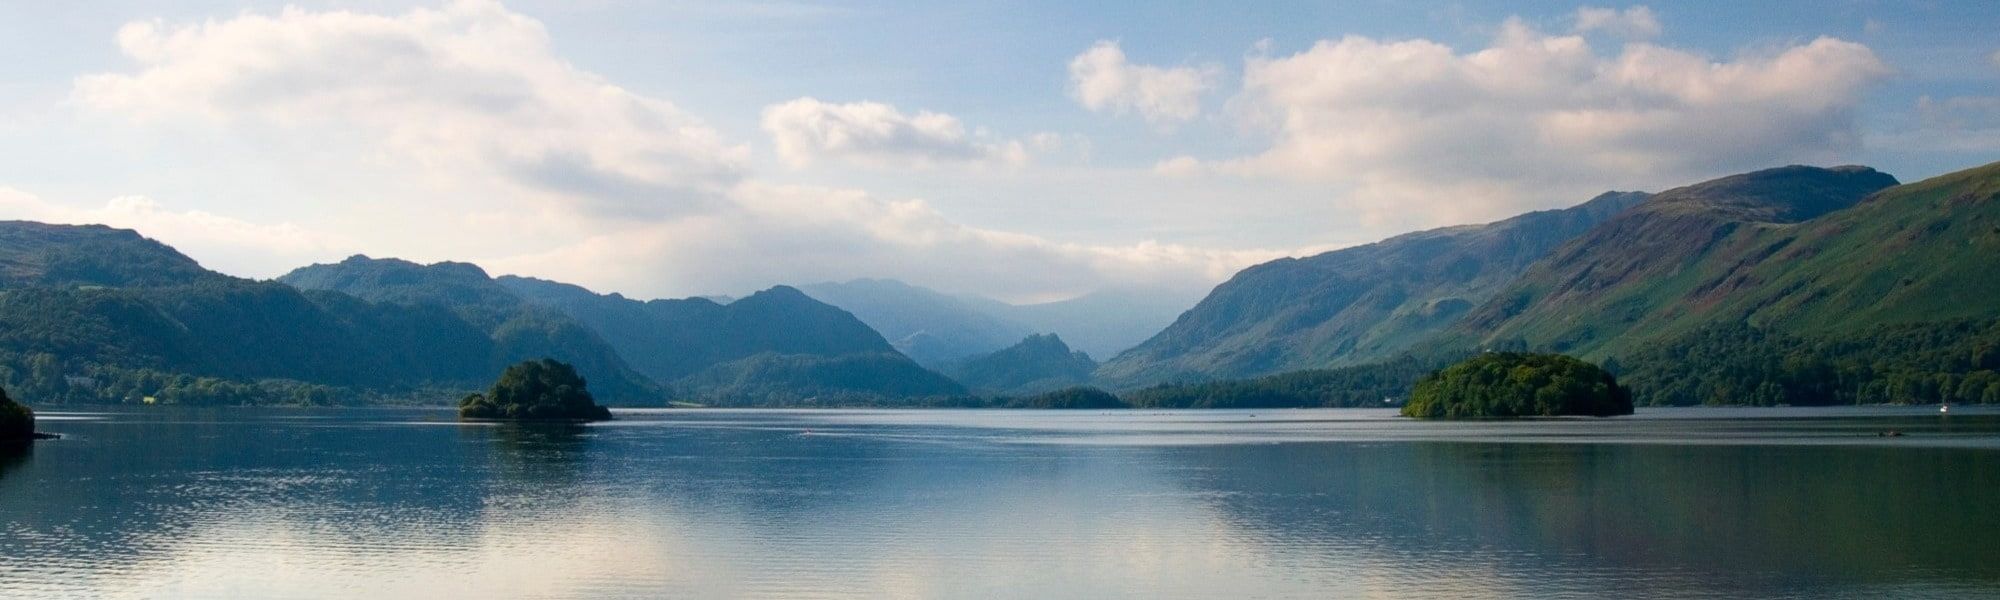 Lakeside view in Cumbria